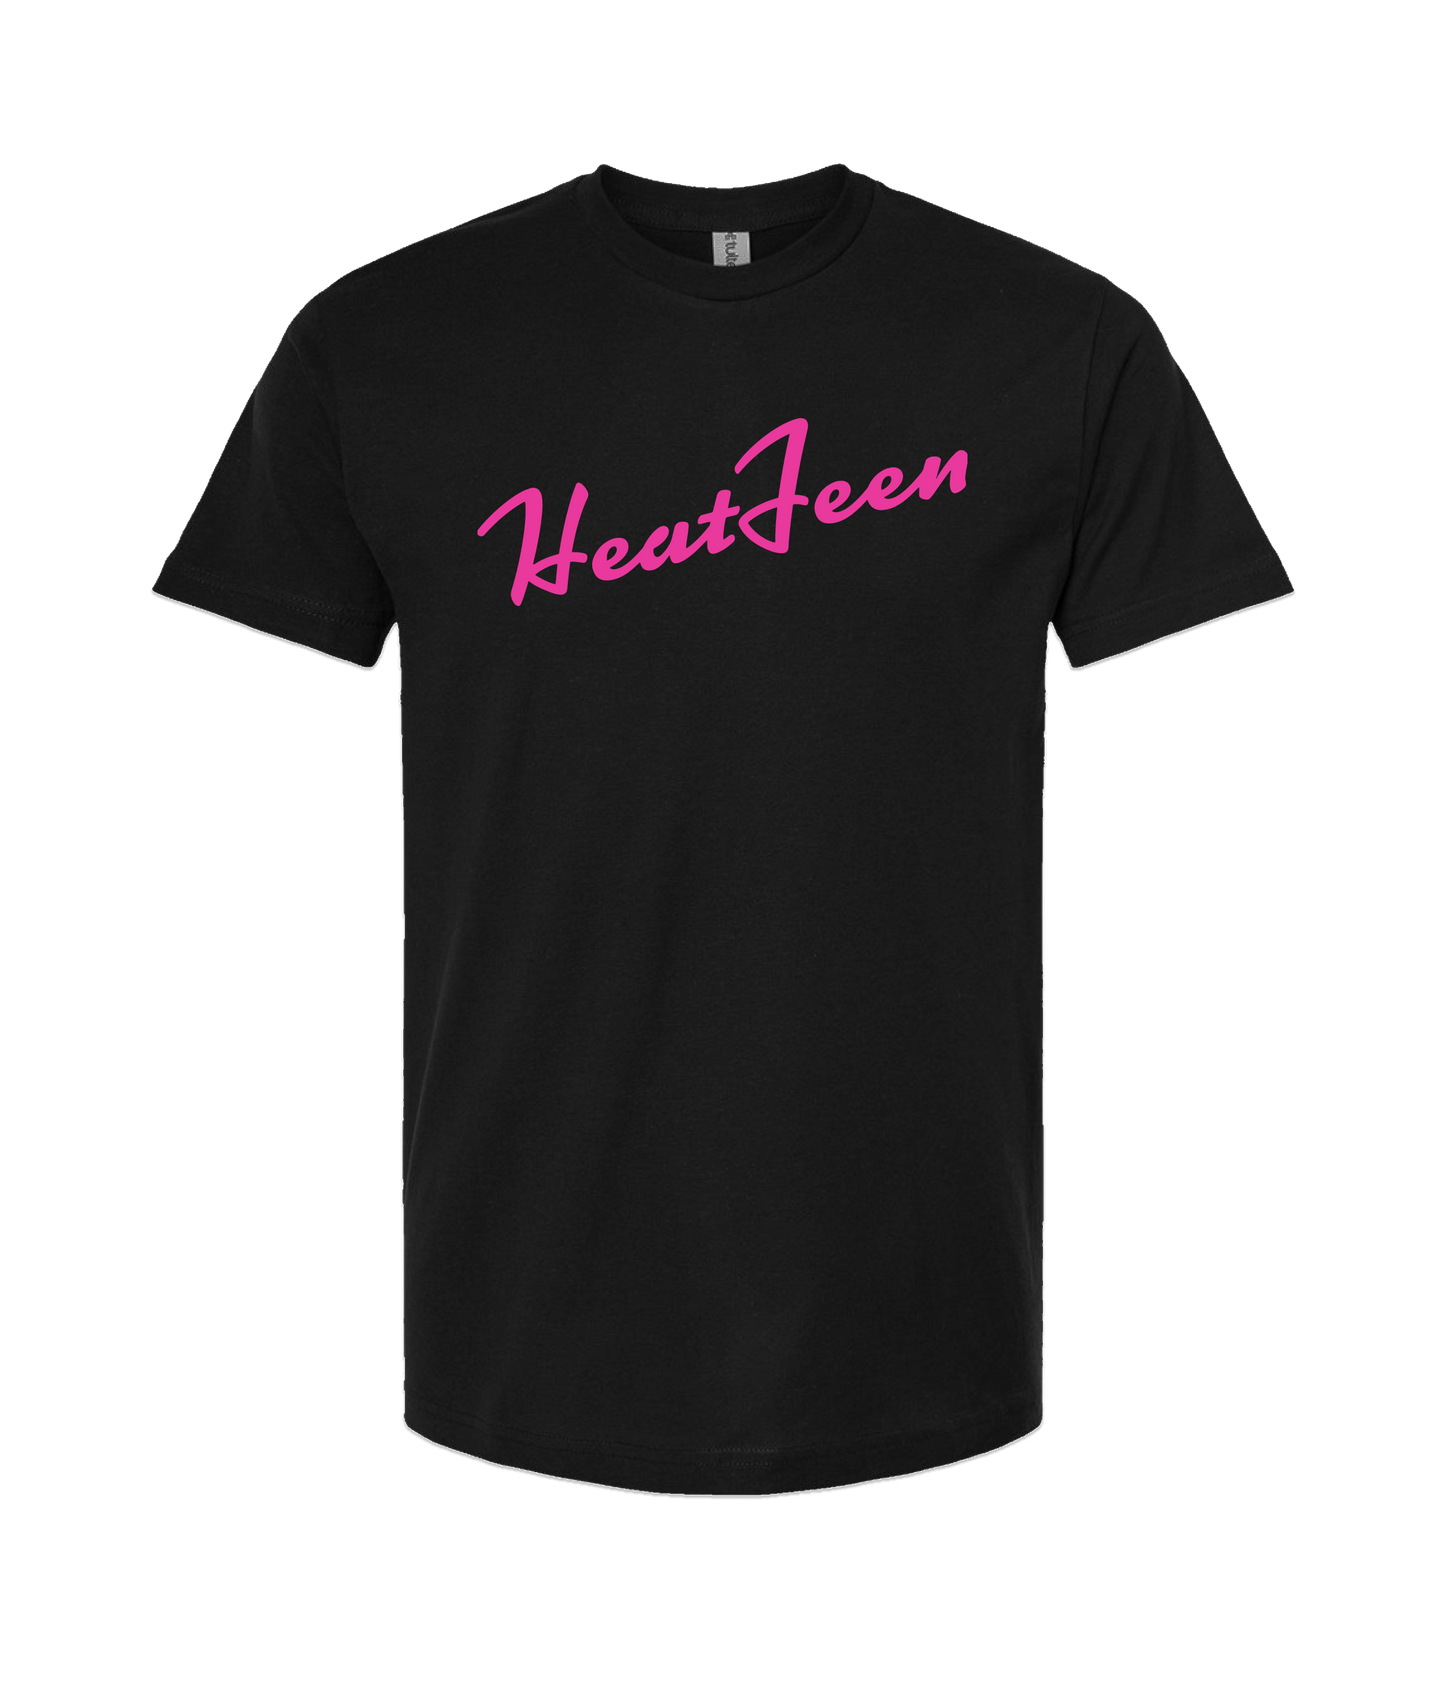 Heatfeen - Logo - Black T Shirt